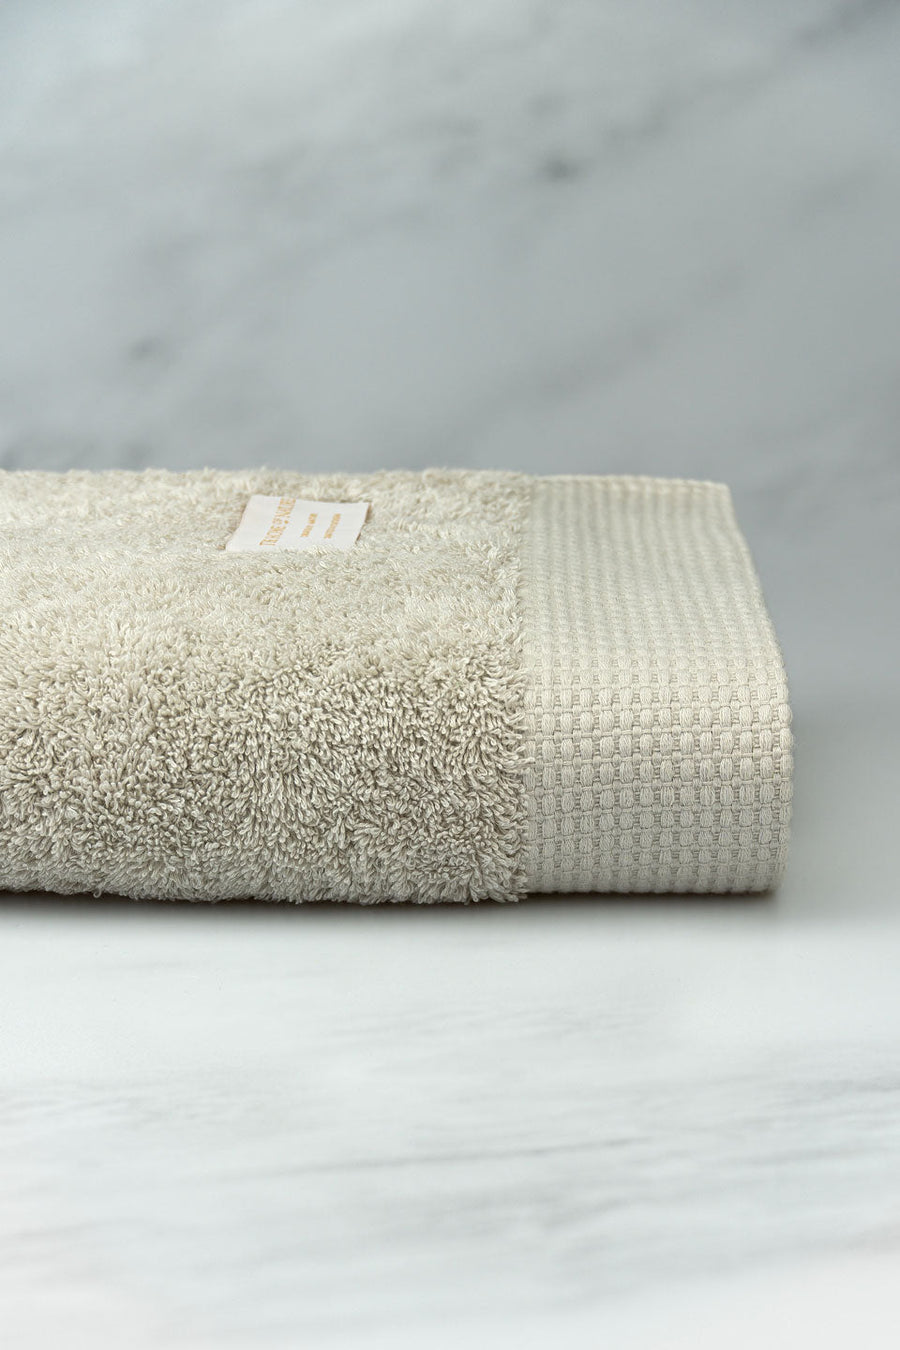 Egyptian Cotton™ Bath Towel 700 GSM